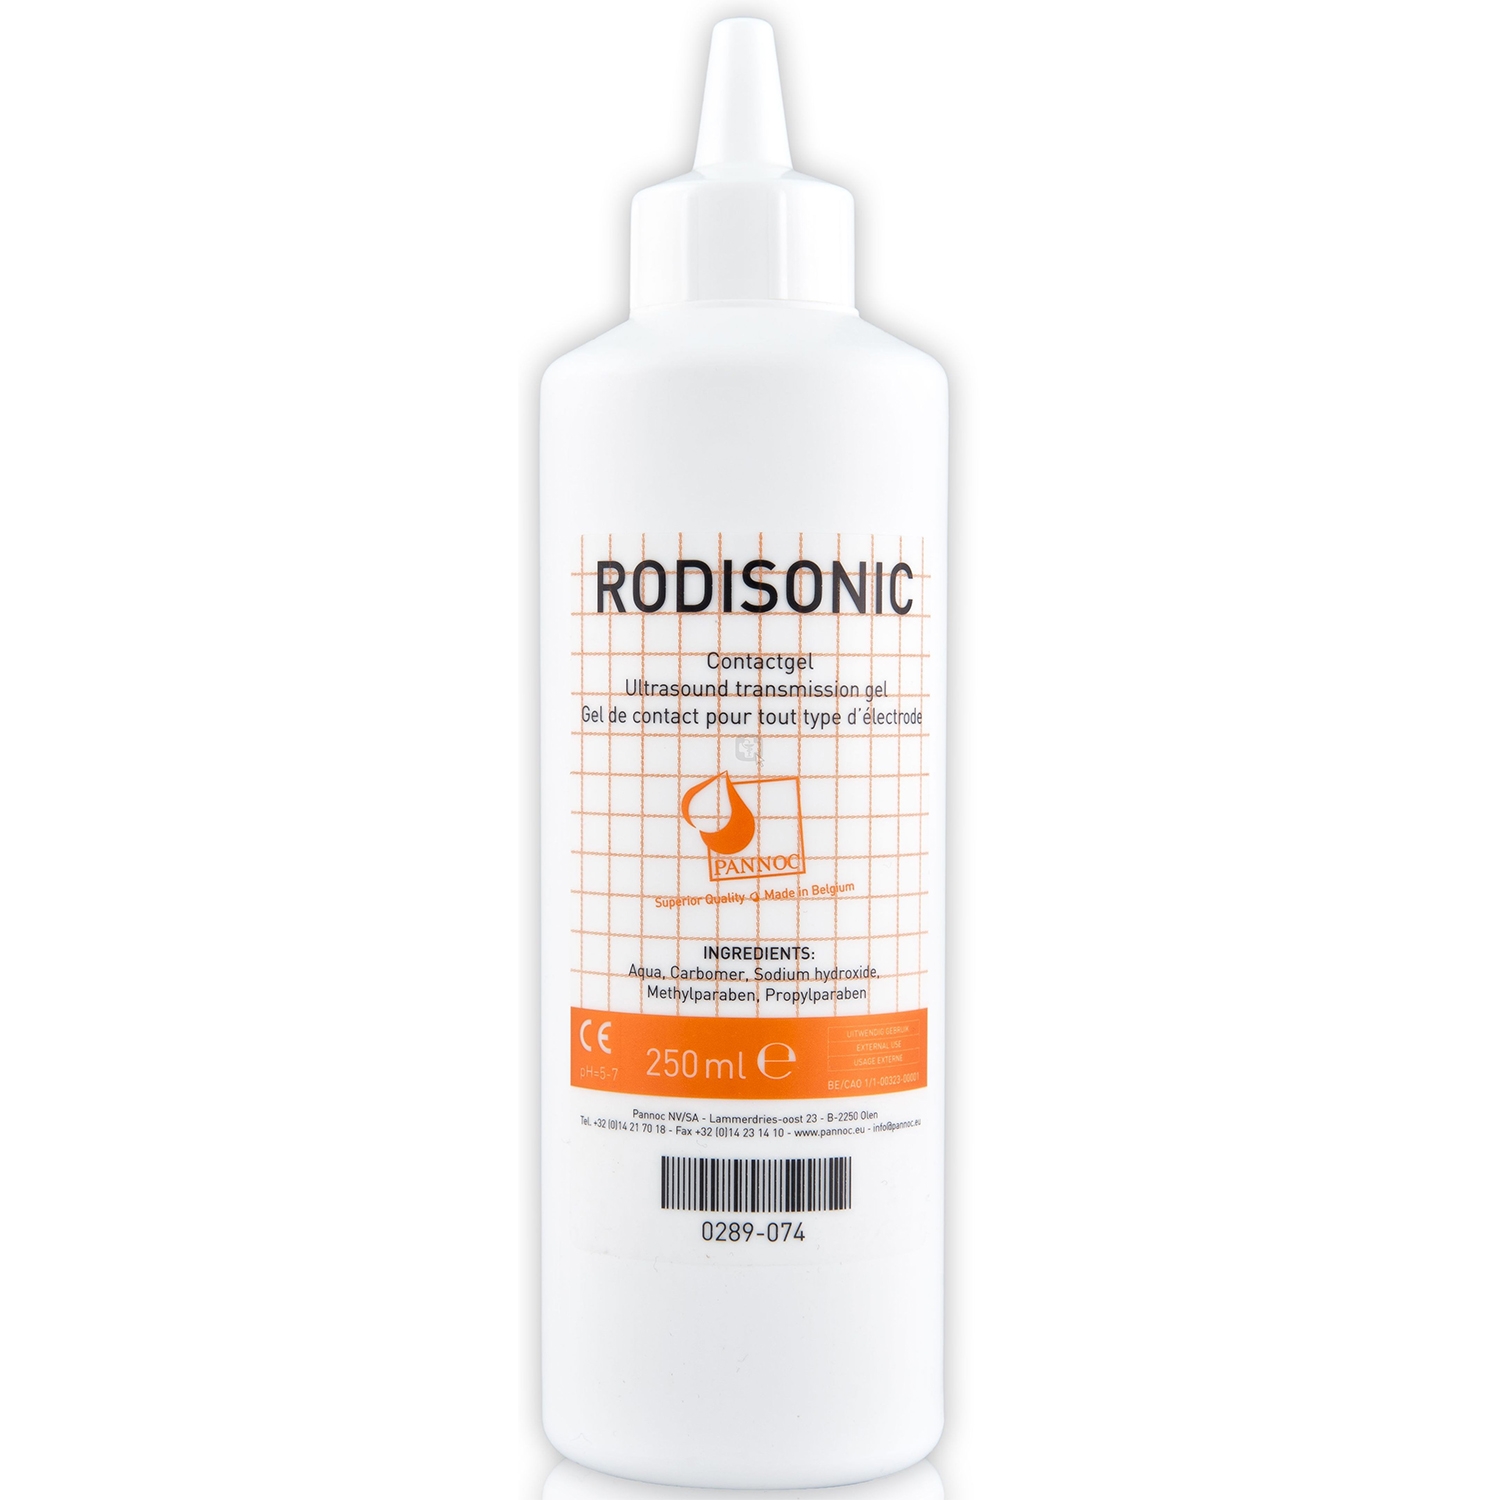 Rodisonic contact gel - 500 ml